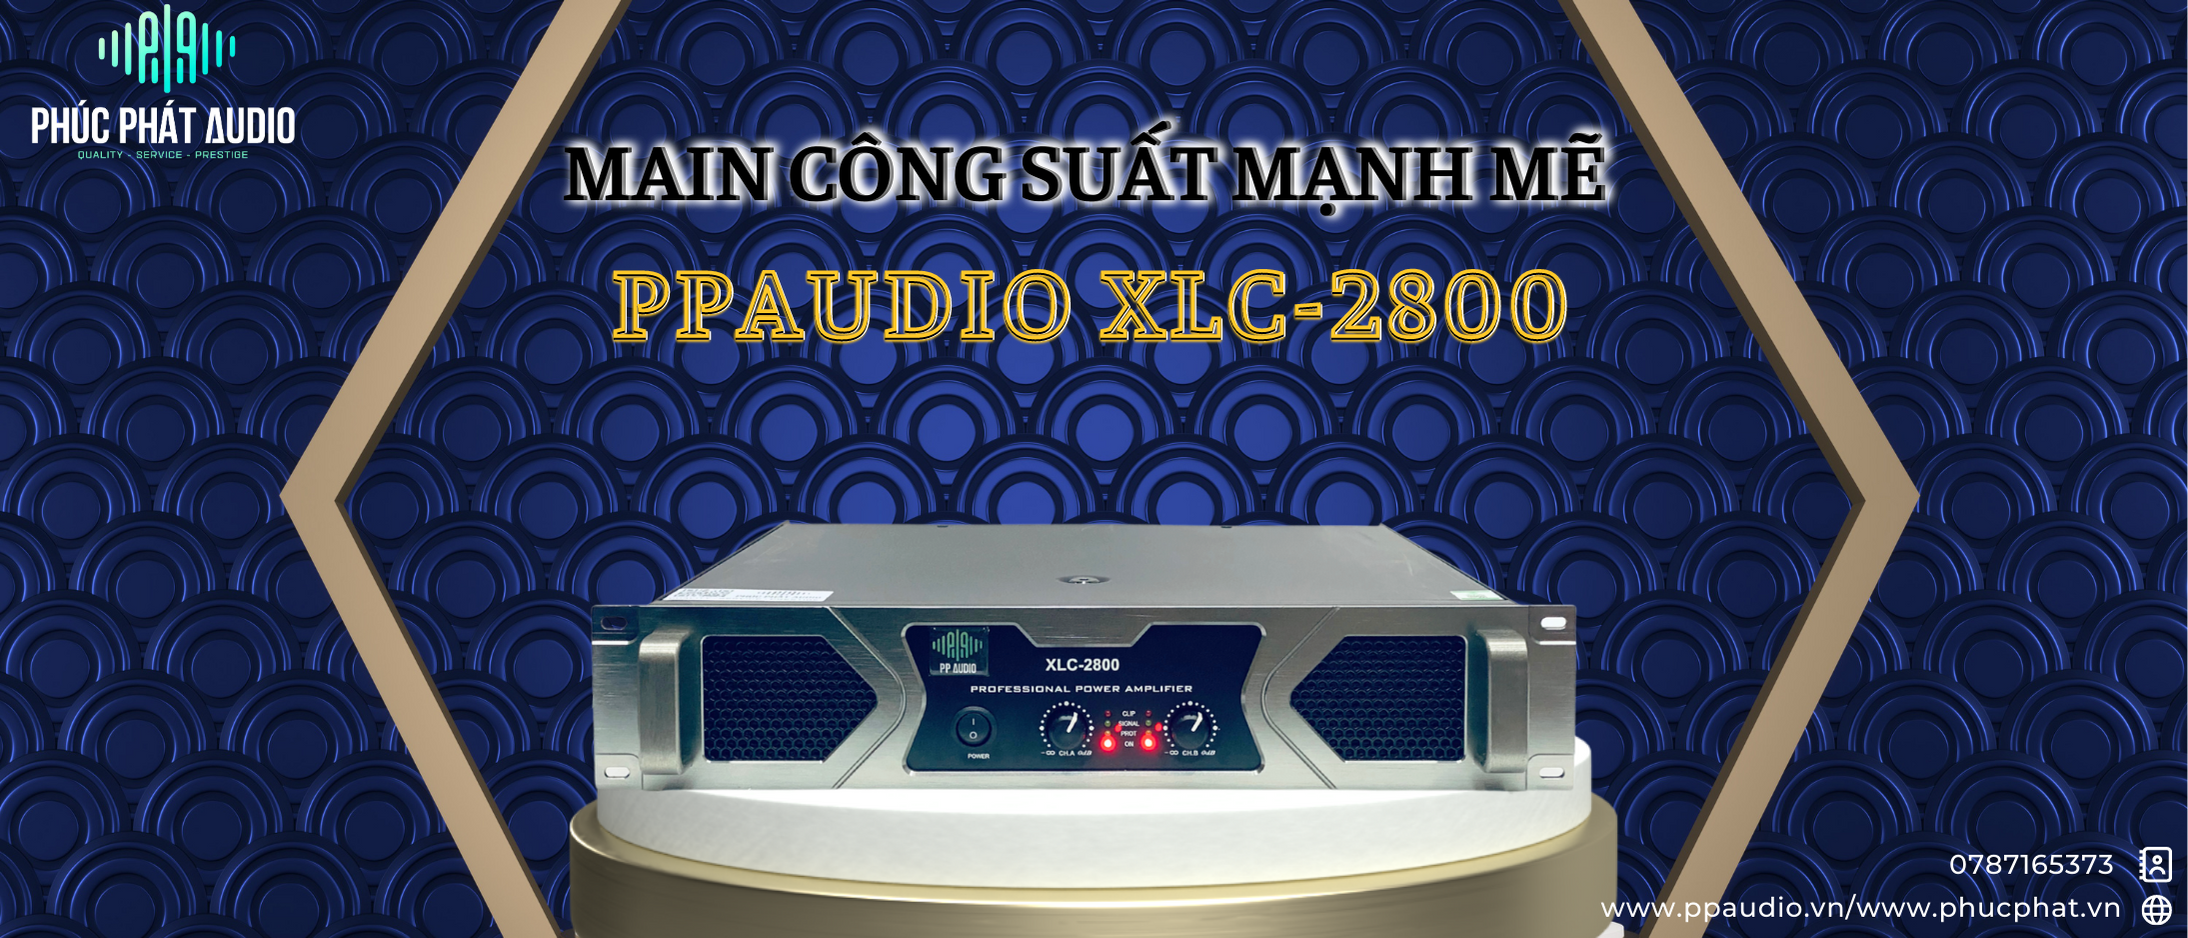 MAIN PPAUDIO XLC-2800